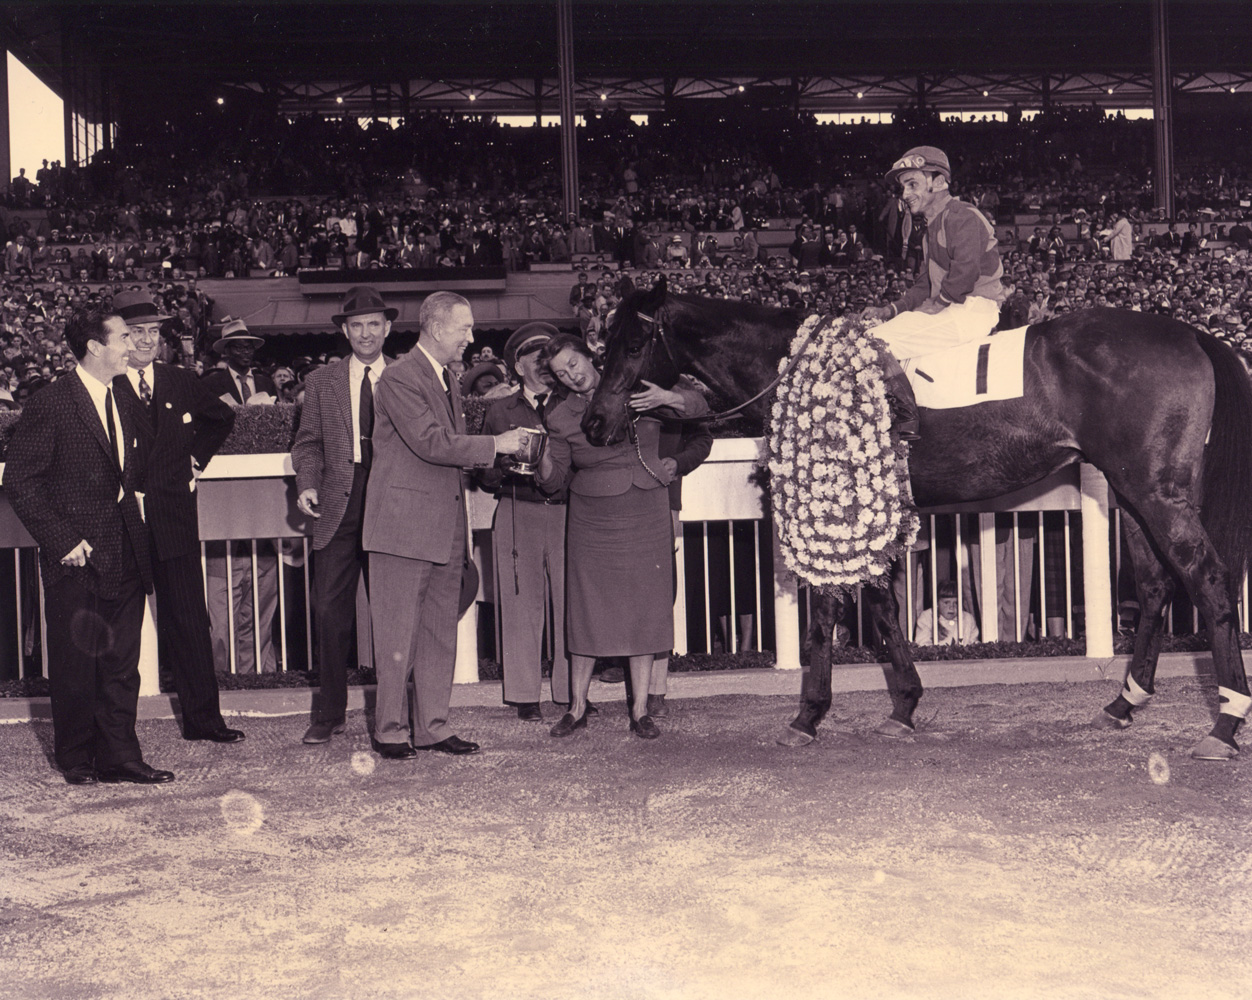 Ralph Neves and Cornhusker in the winner's circle for the 1957 Santa Anita Handicap (Santa Anita Photo/Museum Collection)